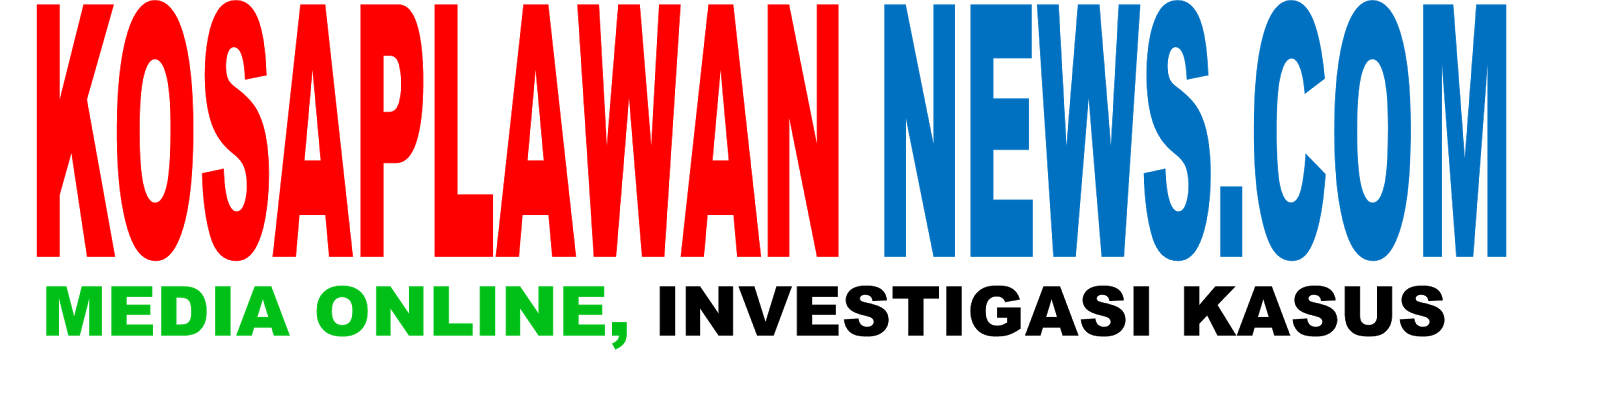 KOSAPLAWAN NEWS.COM